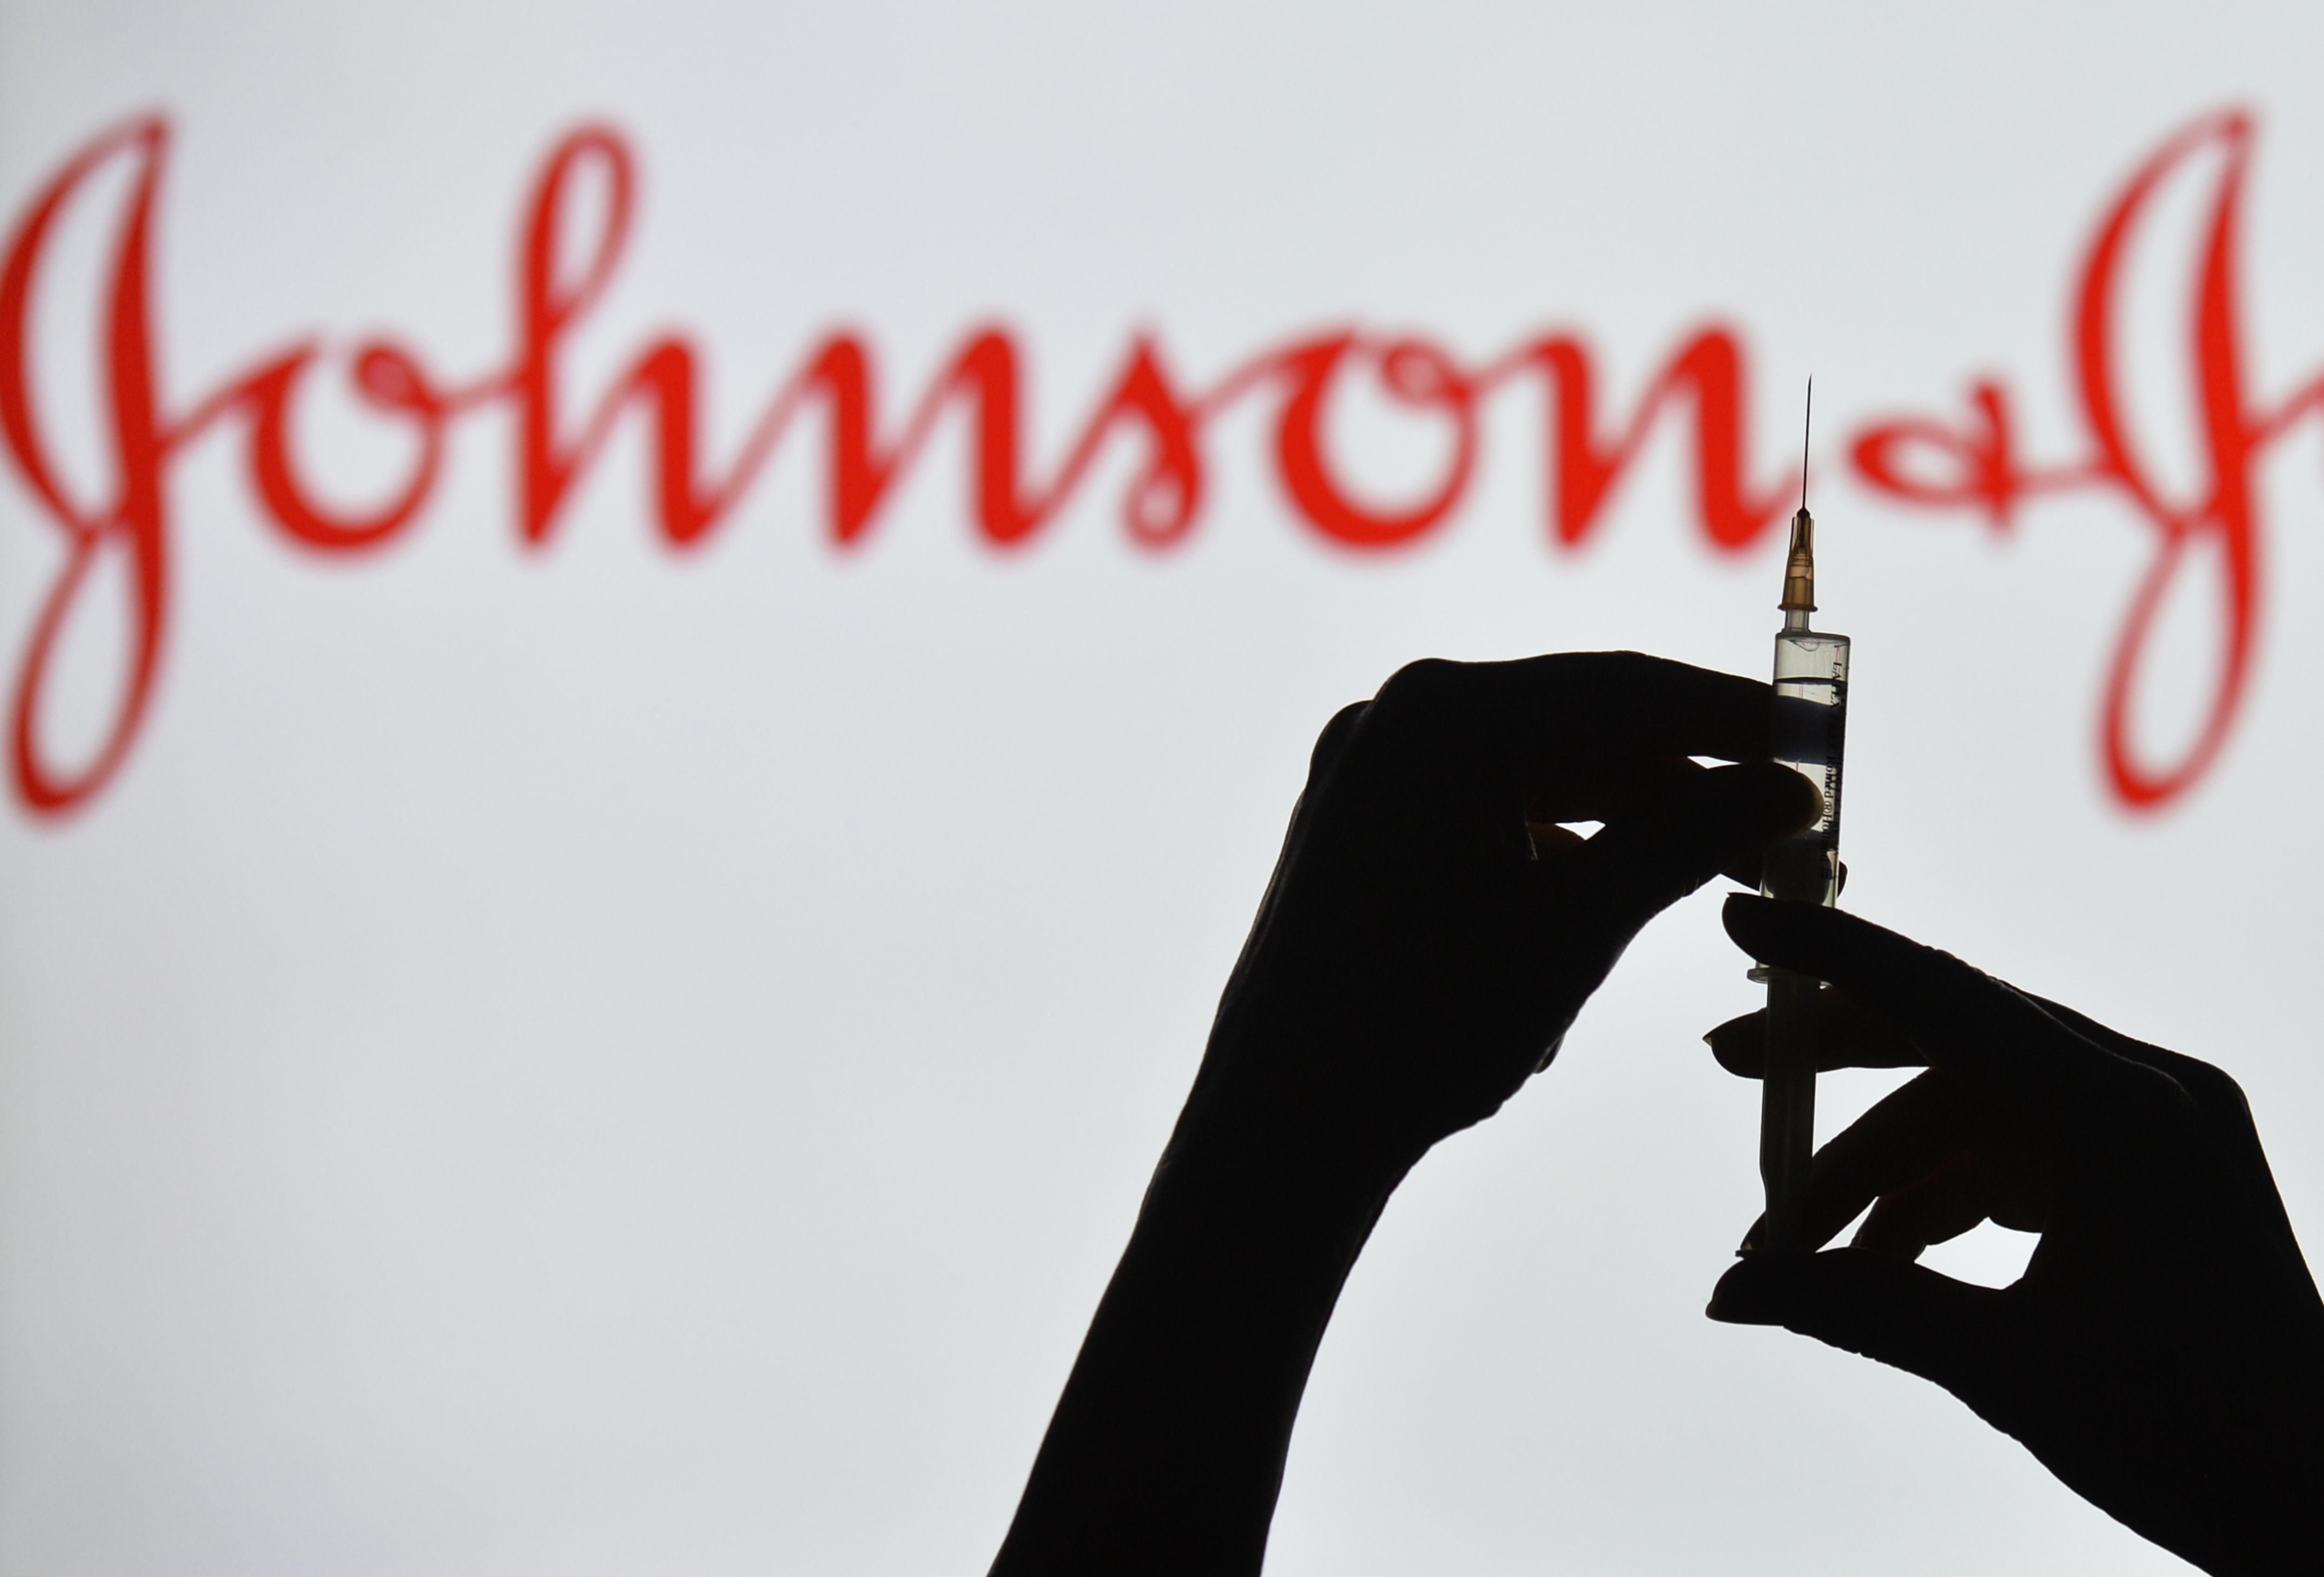 ЕС одобрил одноразовую вакцину против COVID-19 от Johnson & Johnson